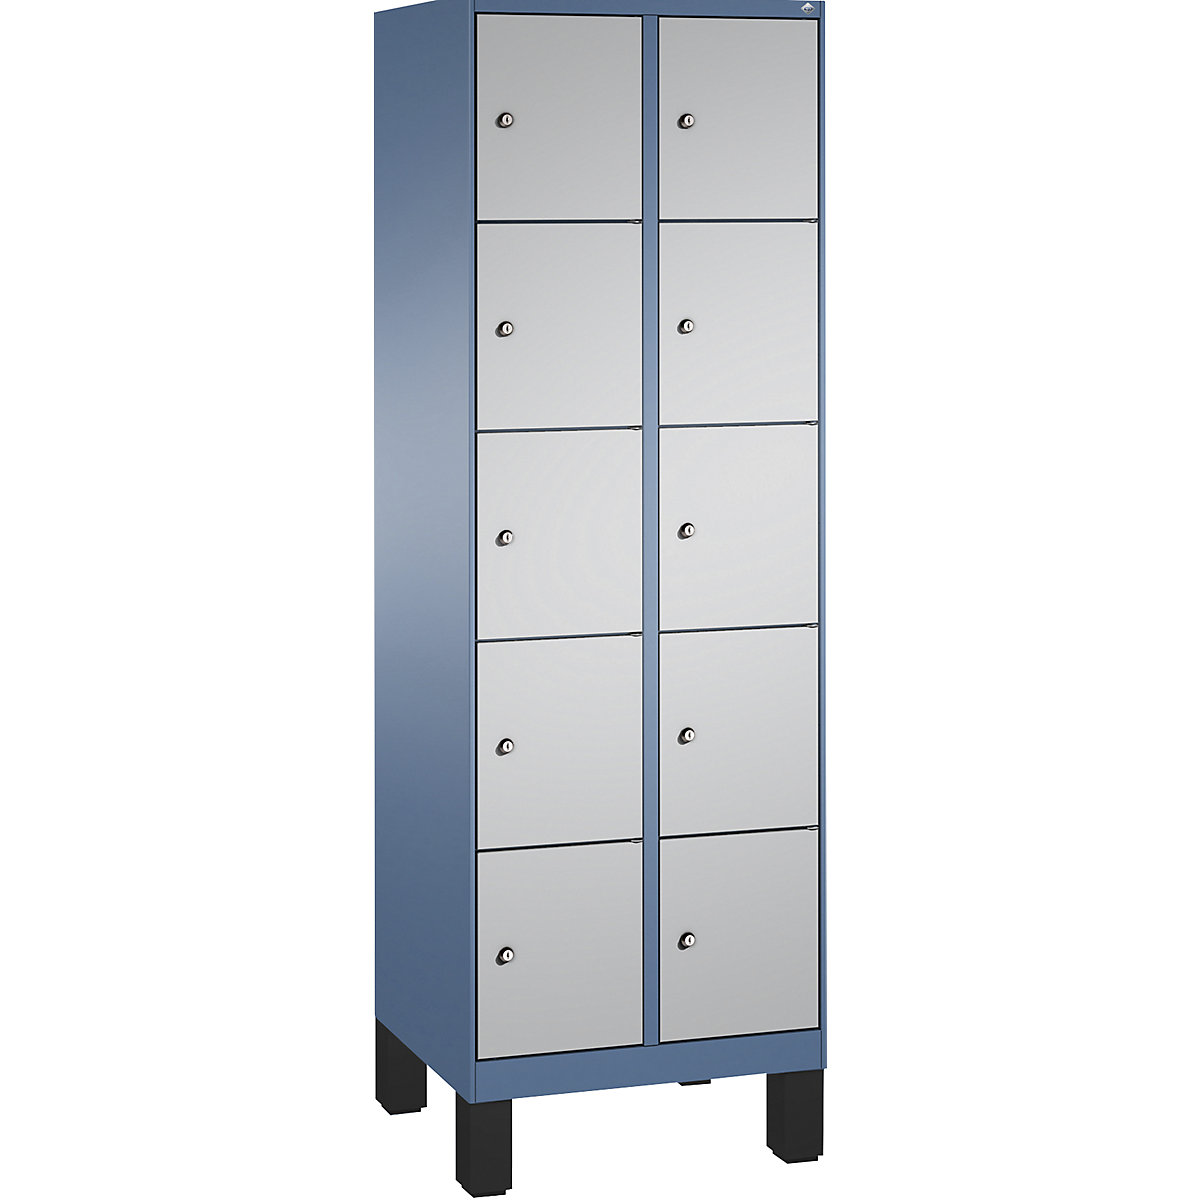 EVOLO locker unit, with feet – C+P, 2 compartments, 5 shelf compartments each, compartment width 300 mm, distant blue / white aluminium-7